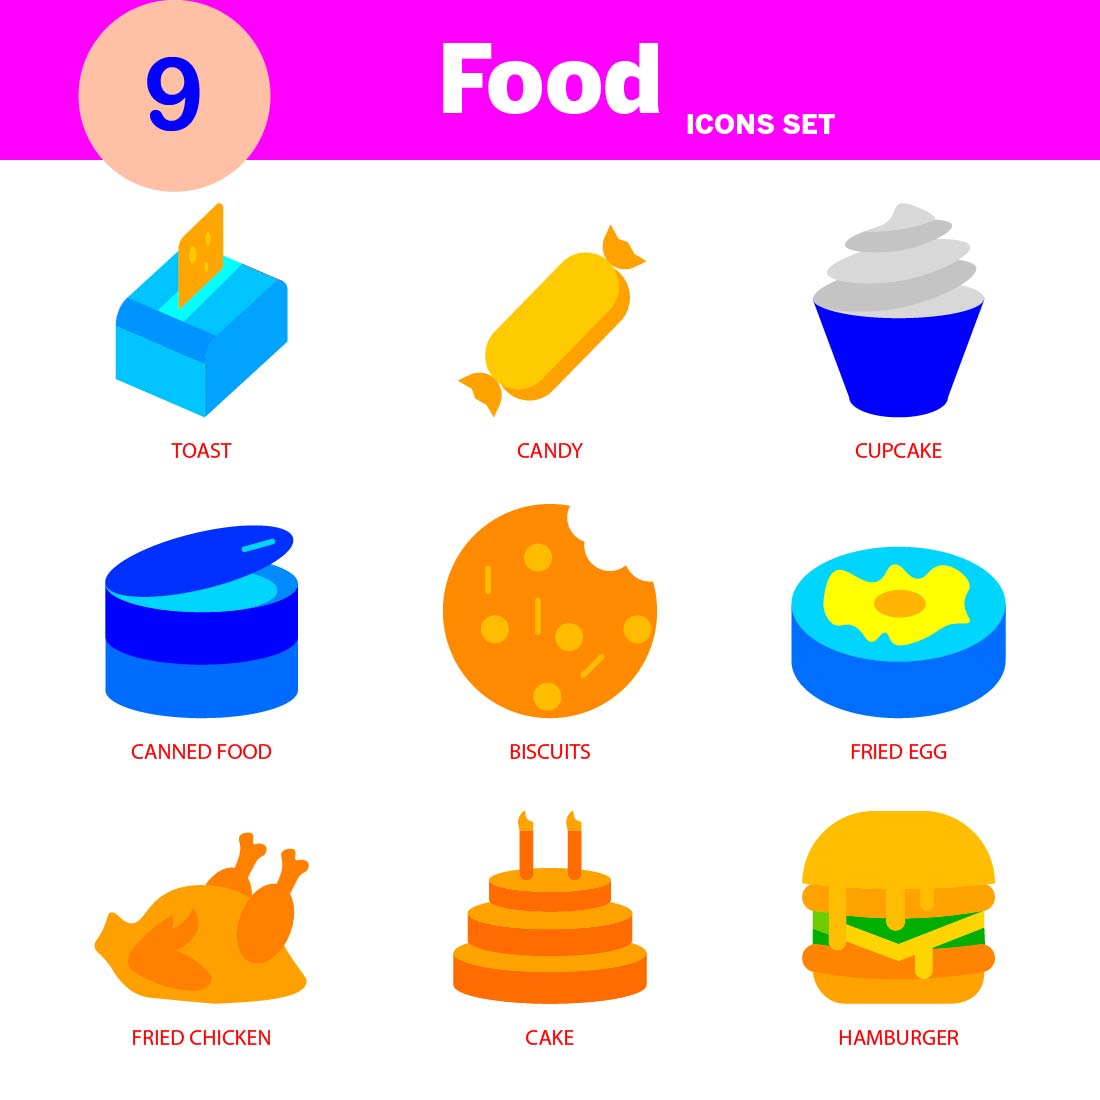 Modern Food icon set editable and resizable cover image.